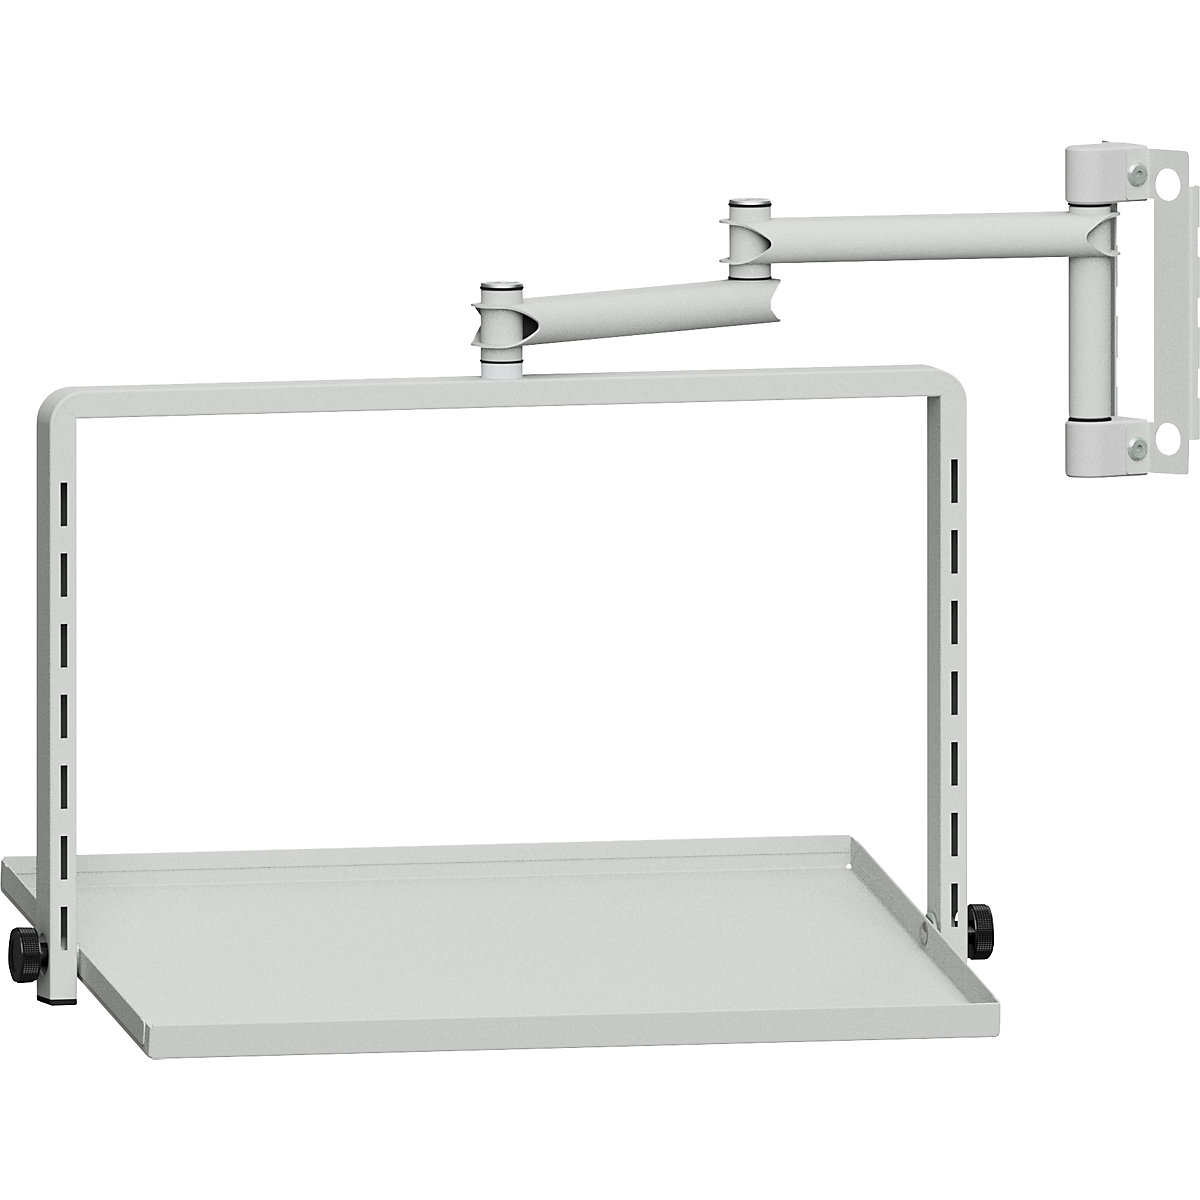 Storage tray for swivelling base frame – ANKE